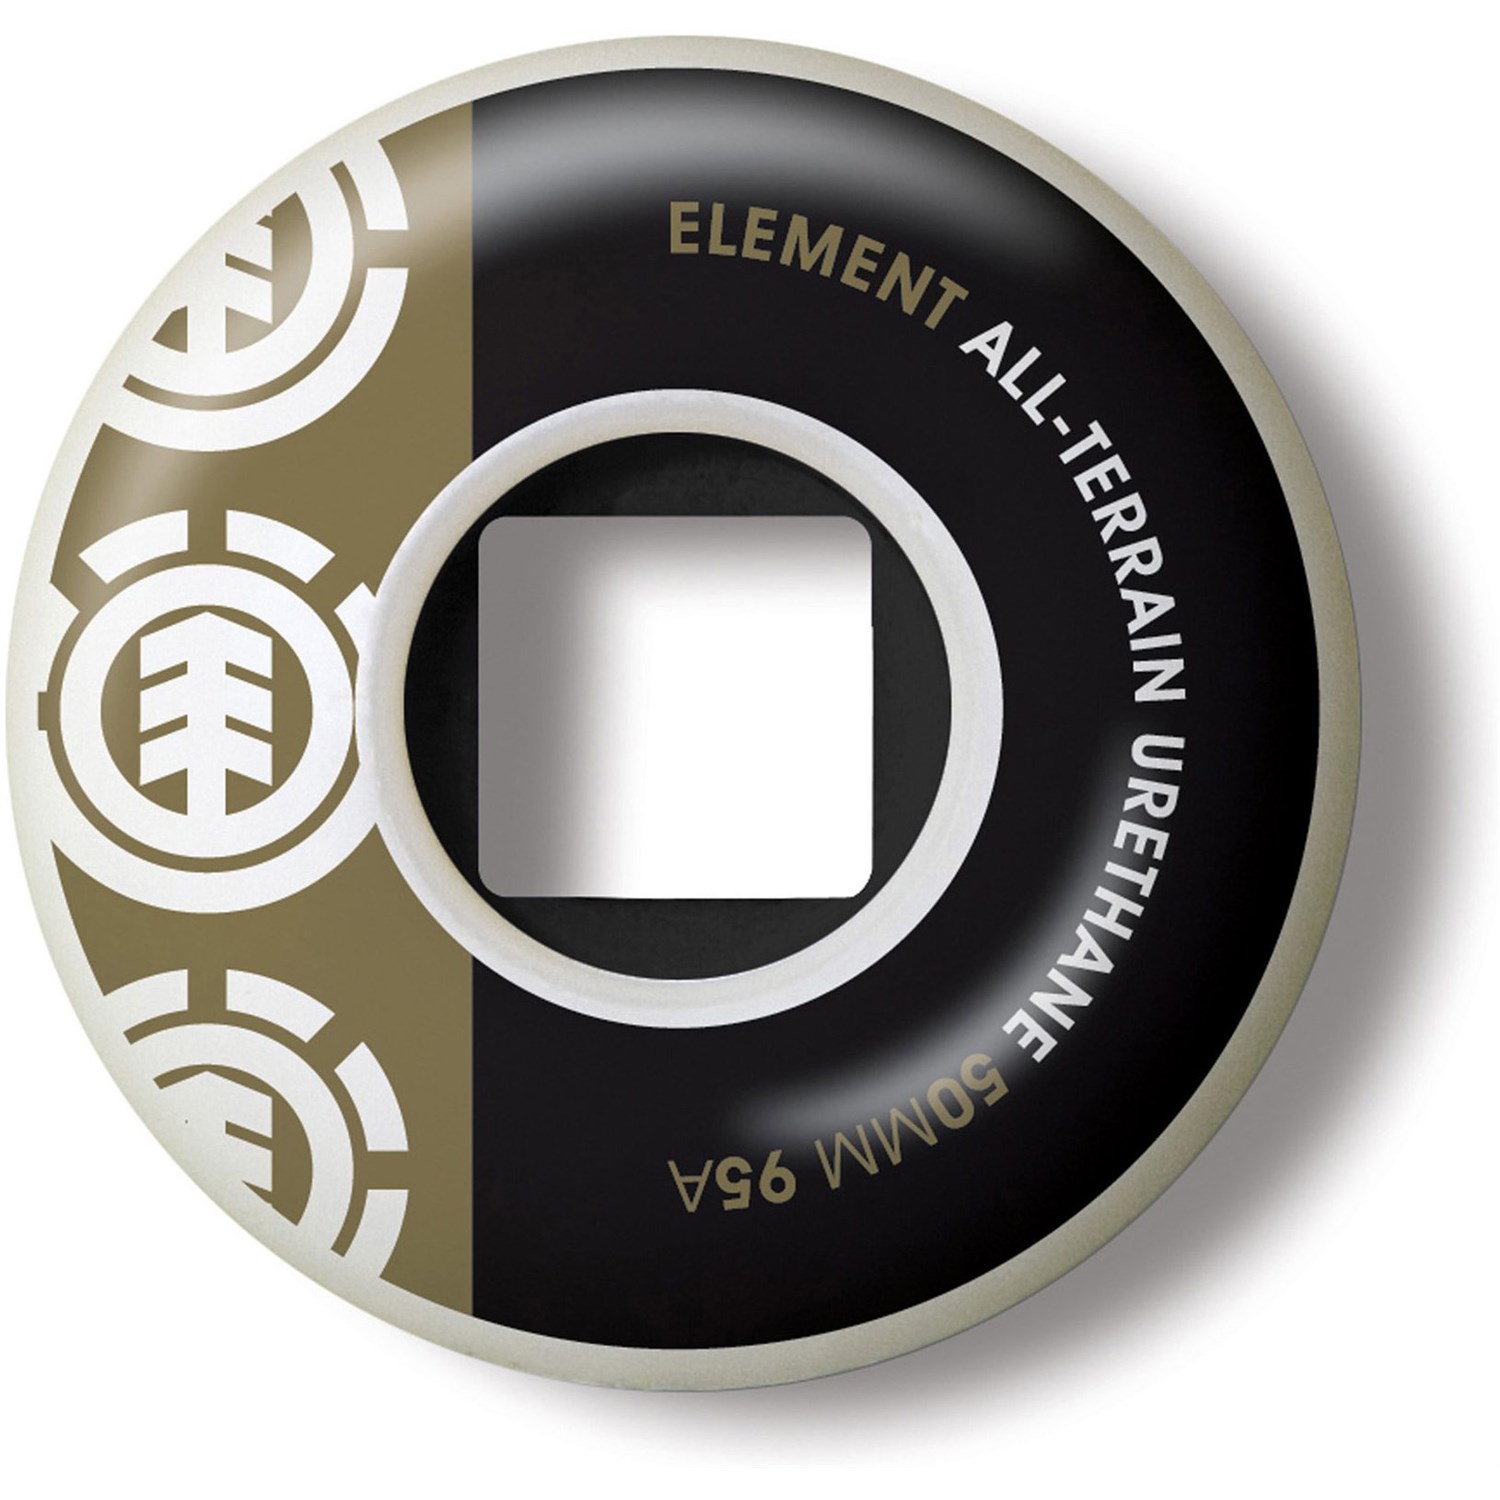 Section element. Логотип element Skateboards. Надпись element на колесо. Элементы колеса.